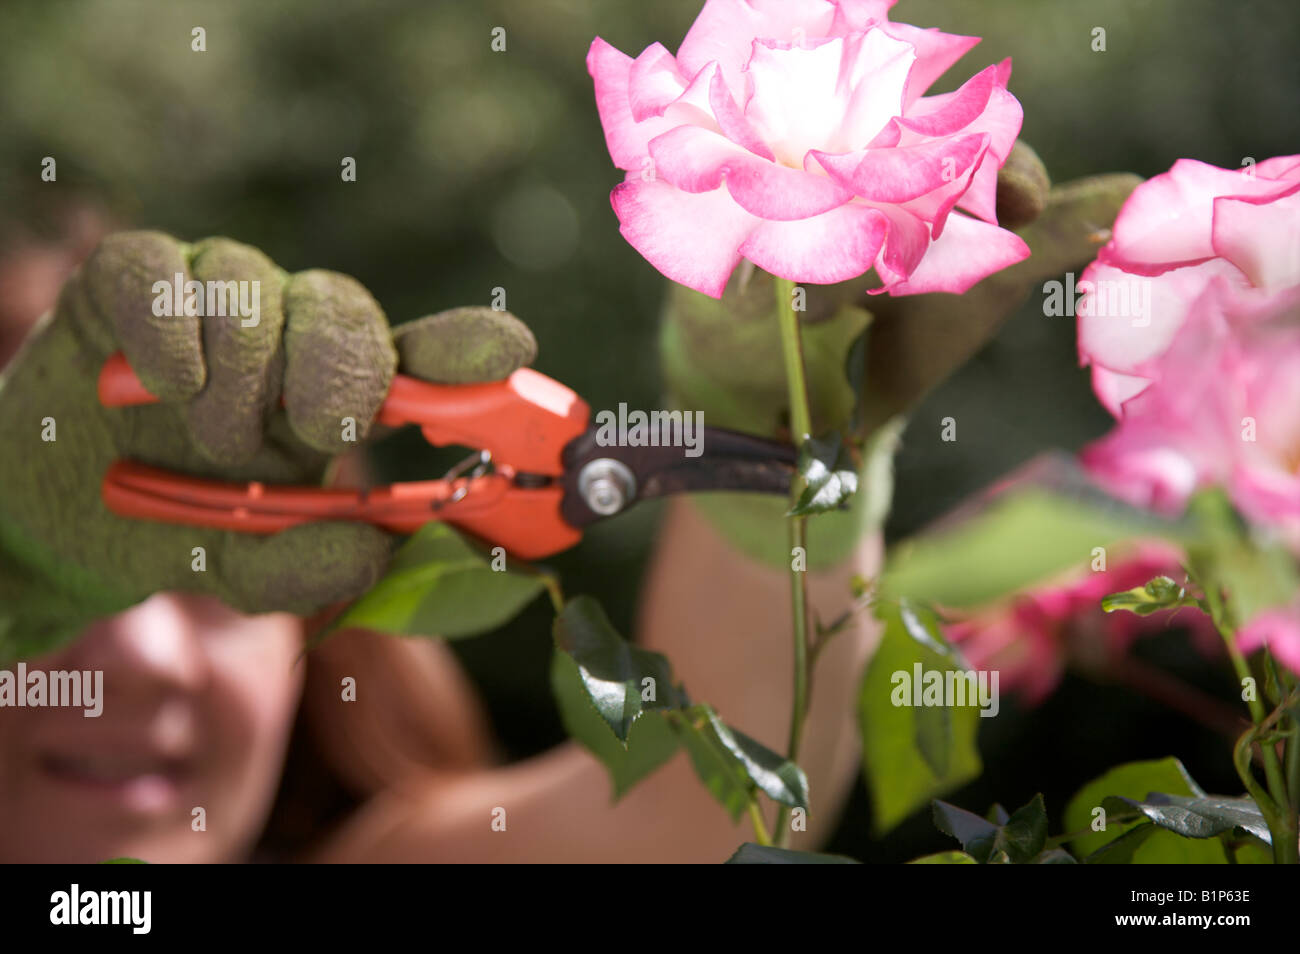 Un jardinier TAILLER UN HANDEL ROSE ROSE EN JUIN Banque D'Images